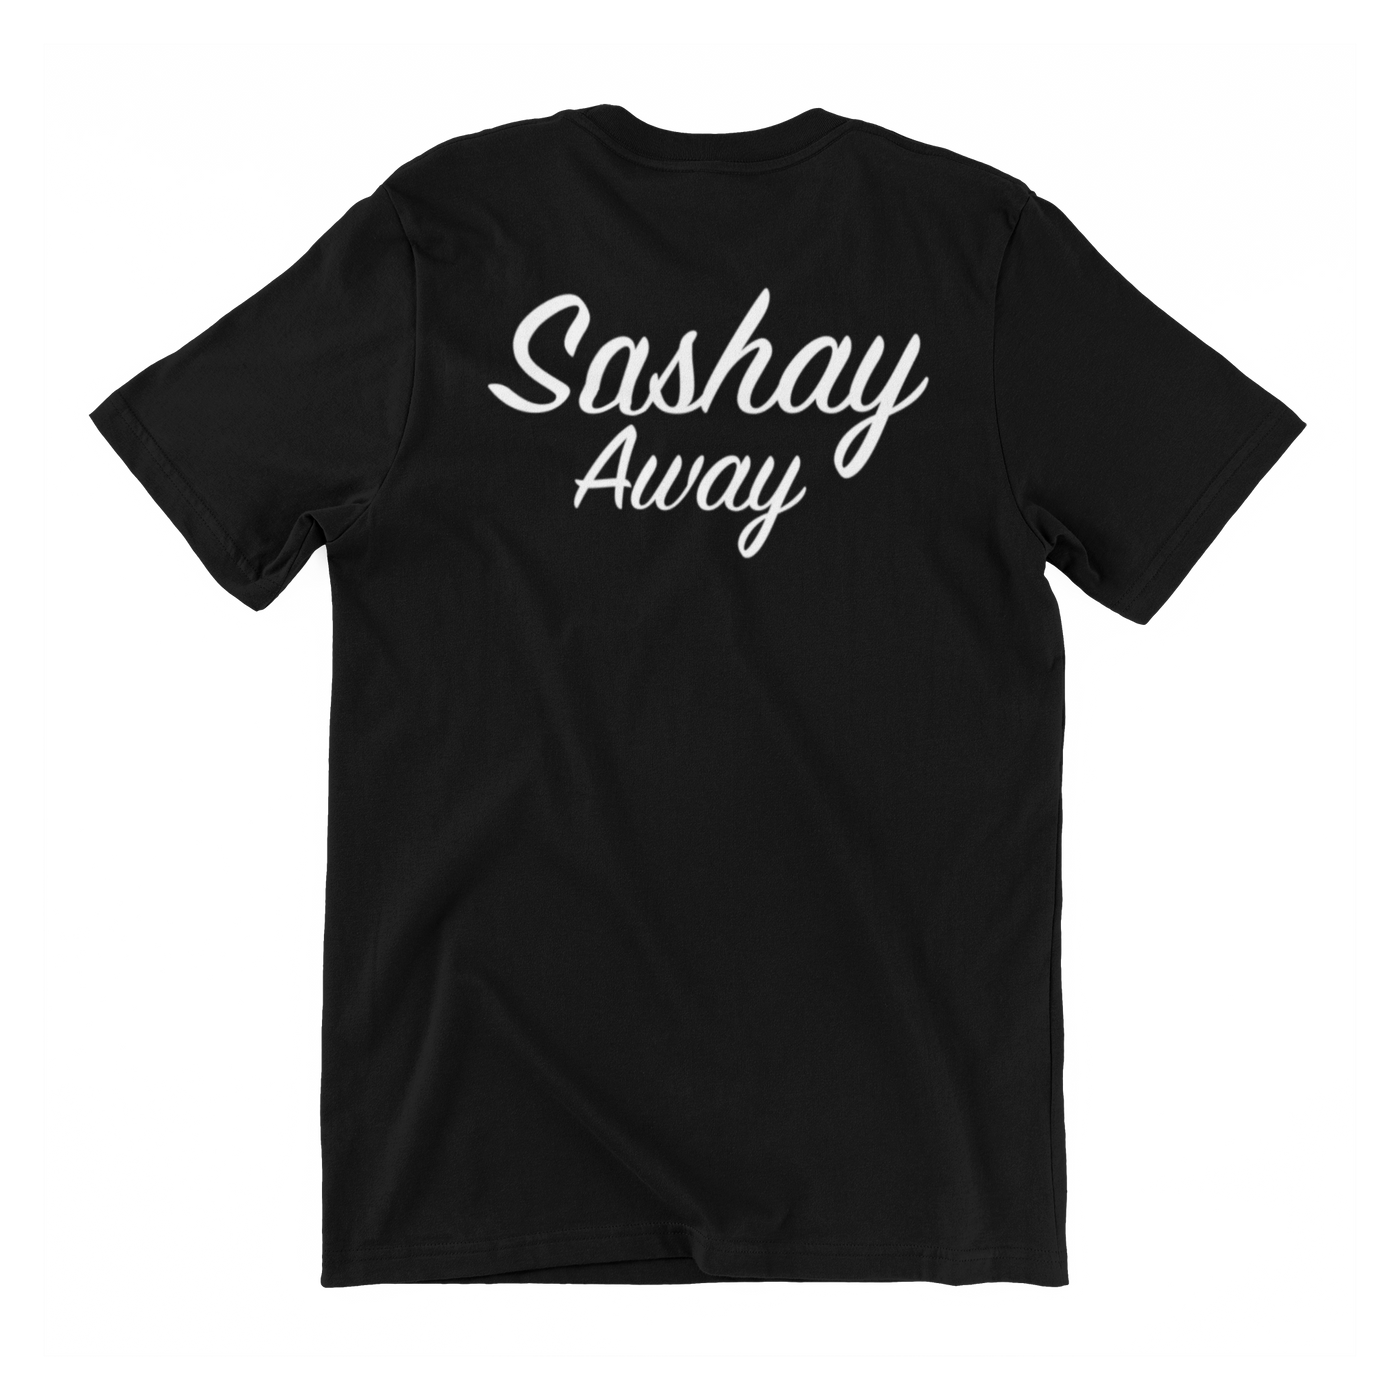 Shantay Sashay T-Shirt